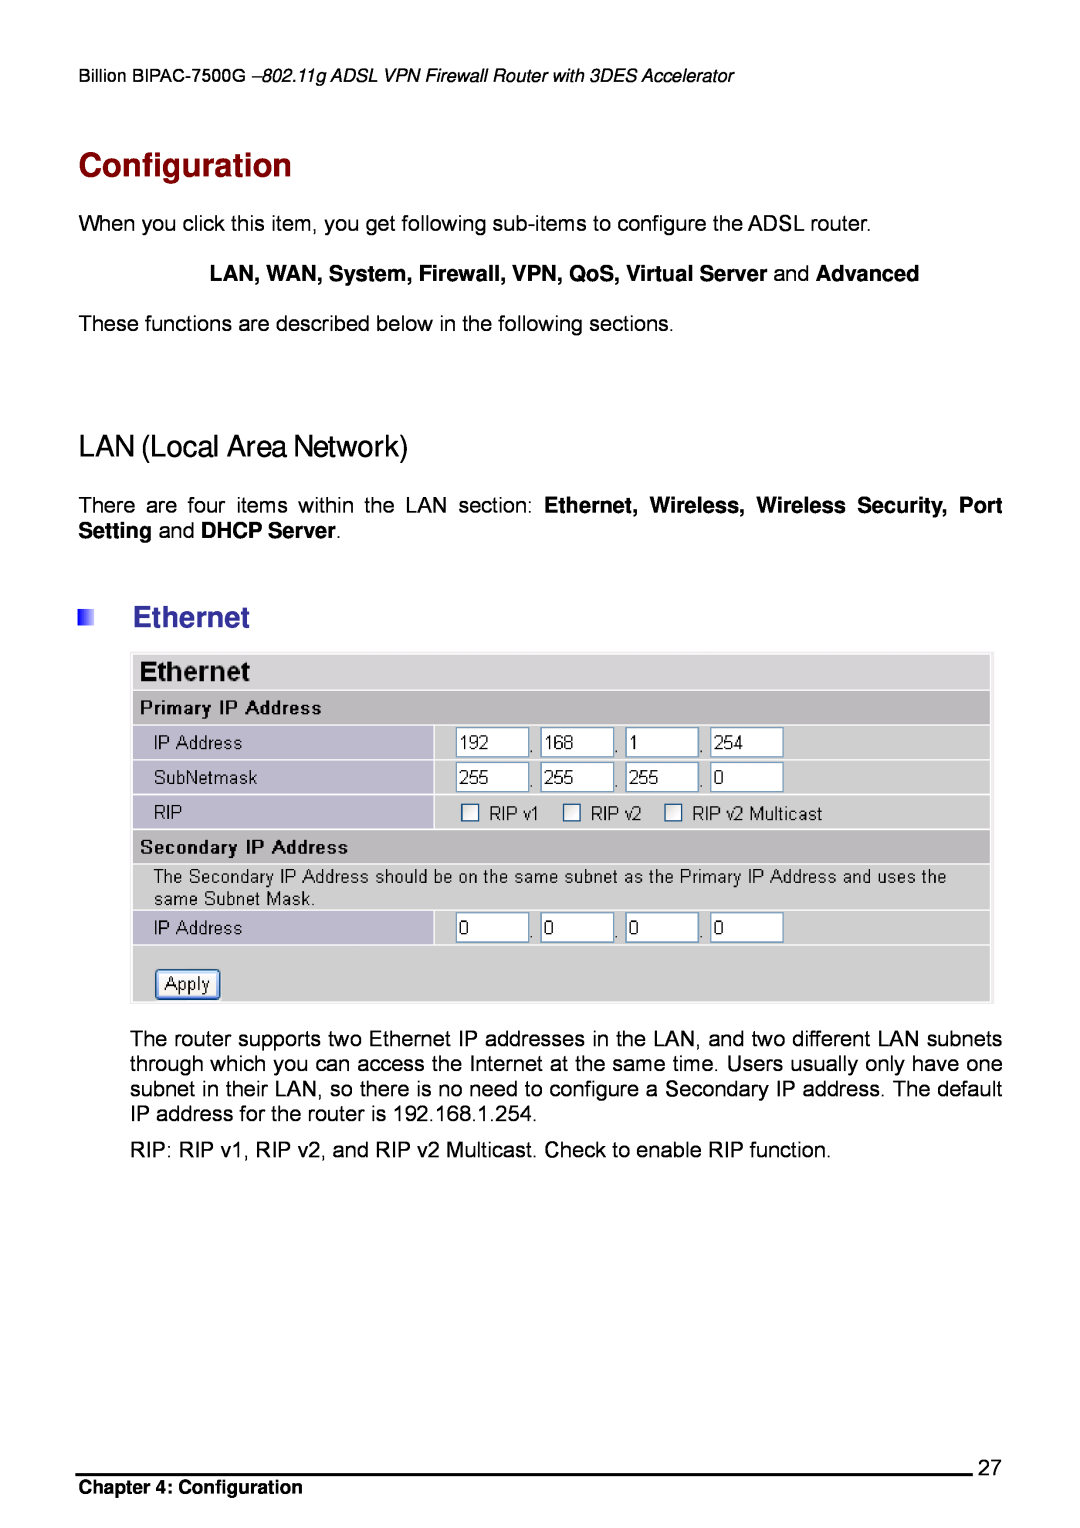 Billion Electric Company BIPAC-7500G user manual Configuration, LAN Local Area Network, Ethernet 